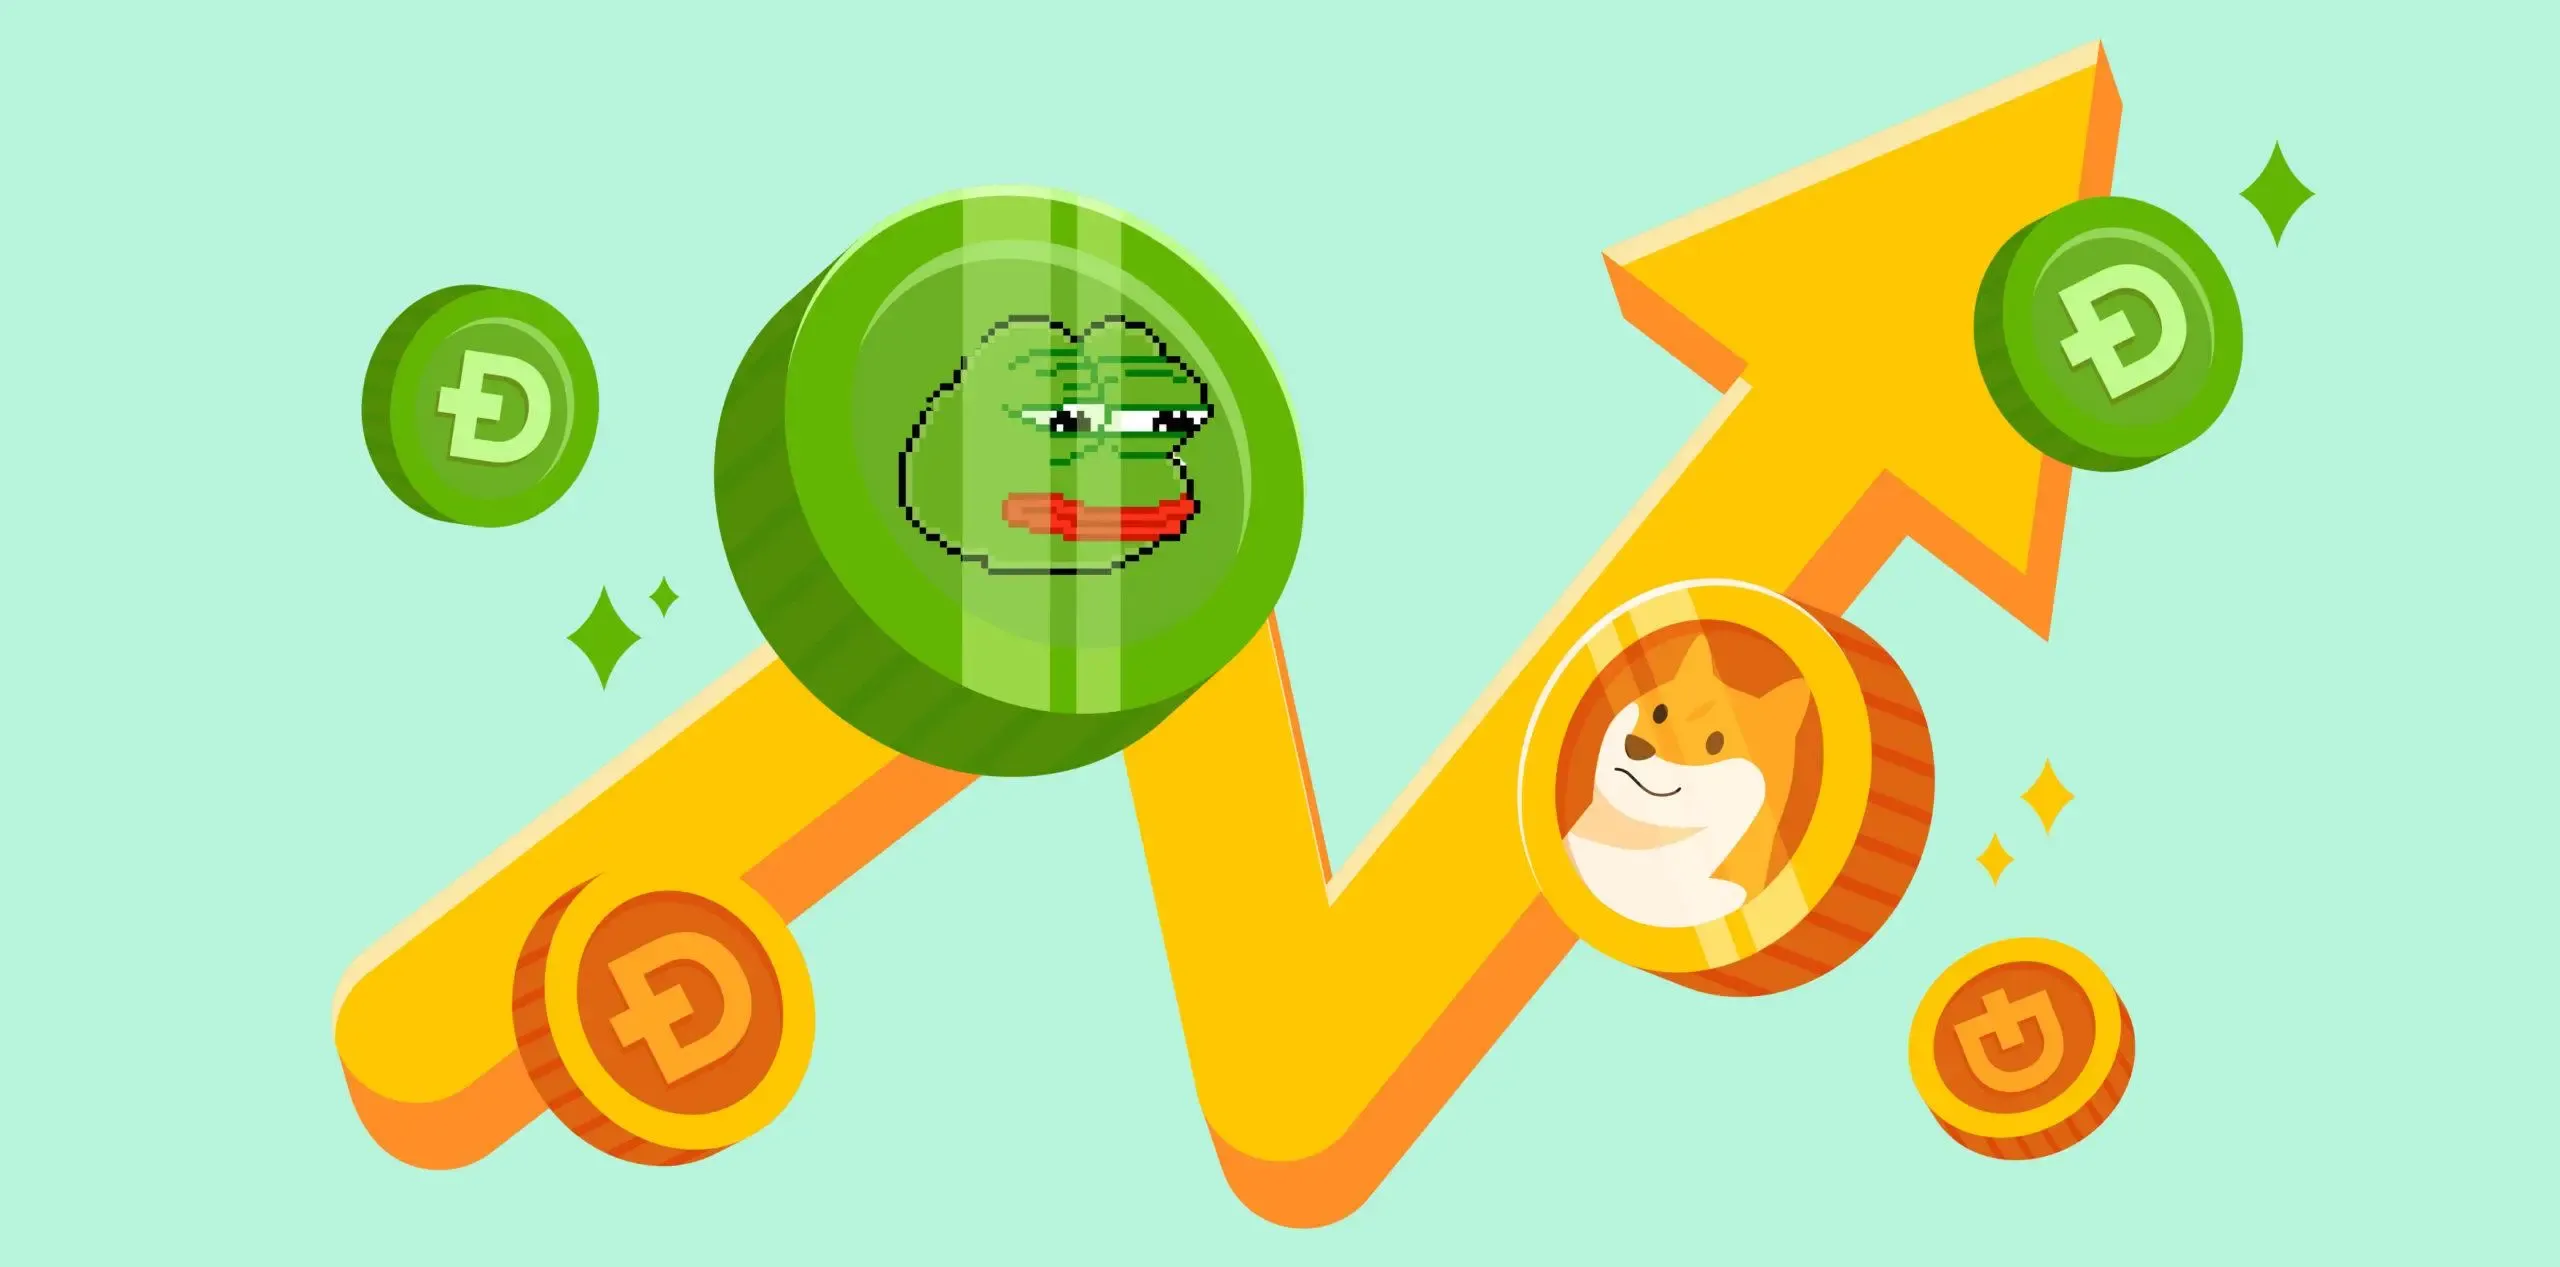 Pepe 大反弹，一览青蛙系 Meme 家谱与背后文化